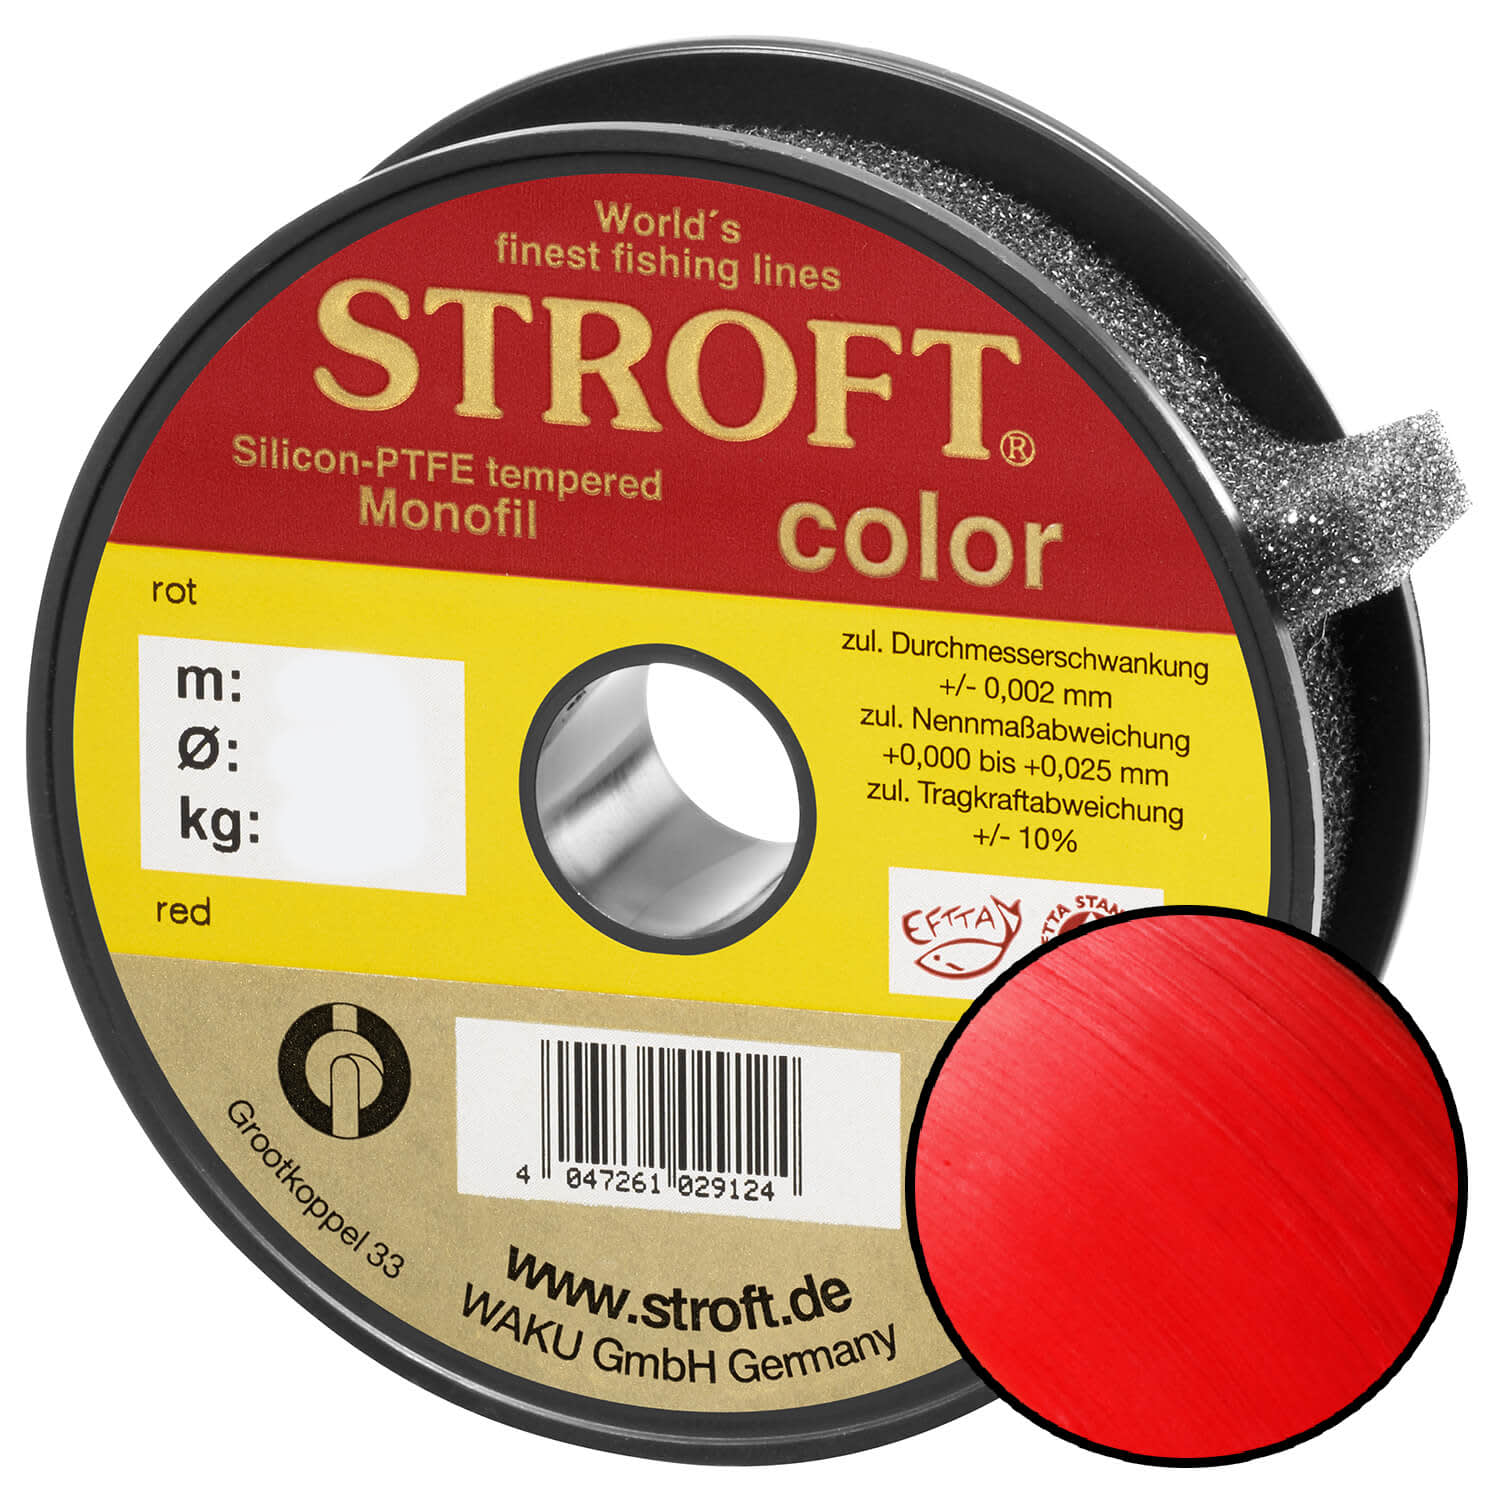 STROFT Color Monofilament Fishing Line Red 0,20mm 3,9kg